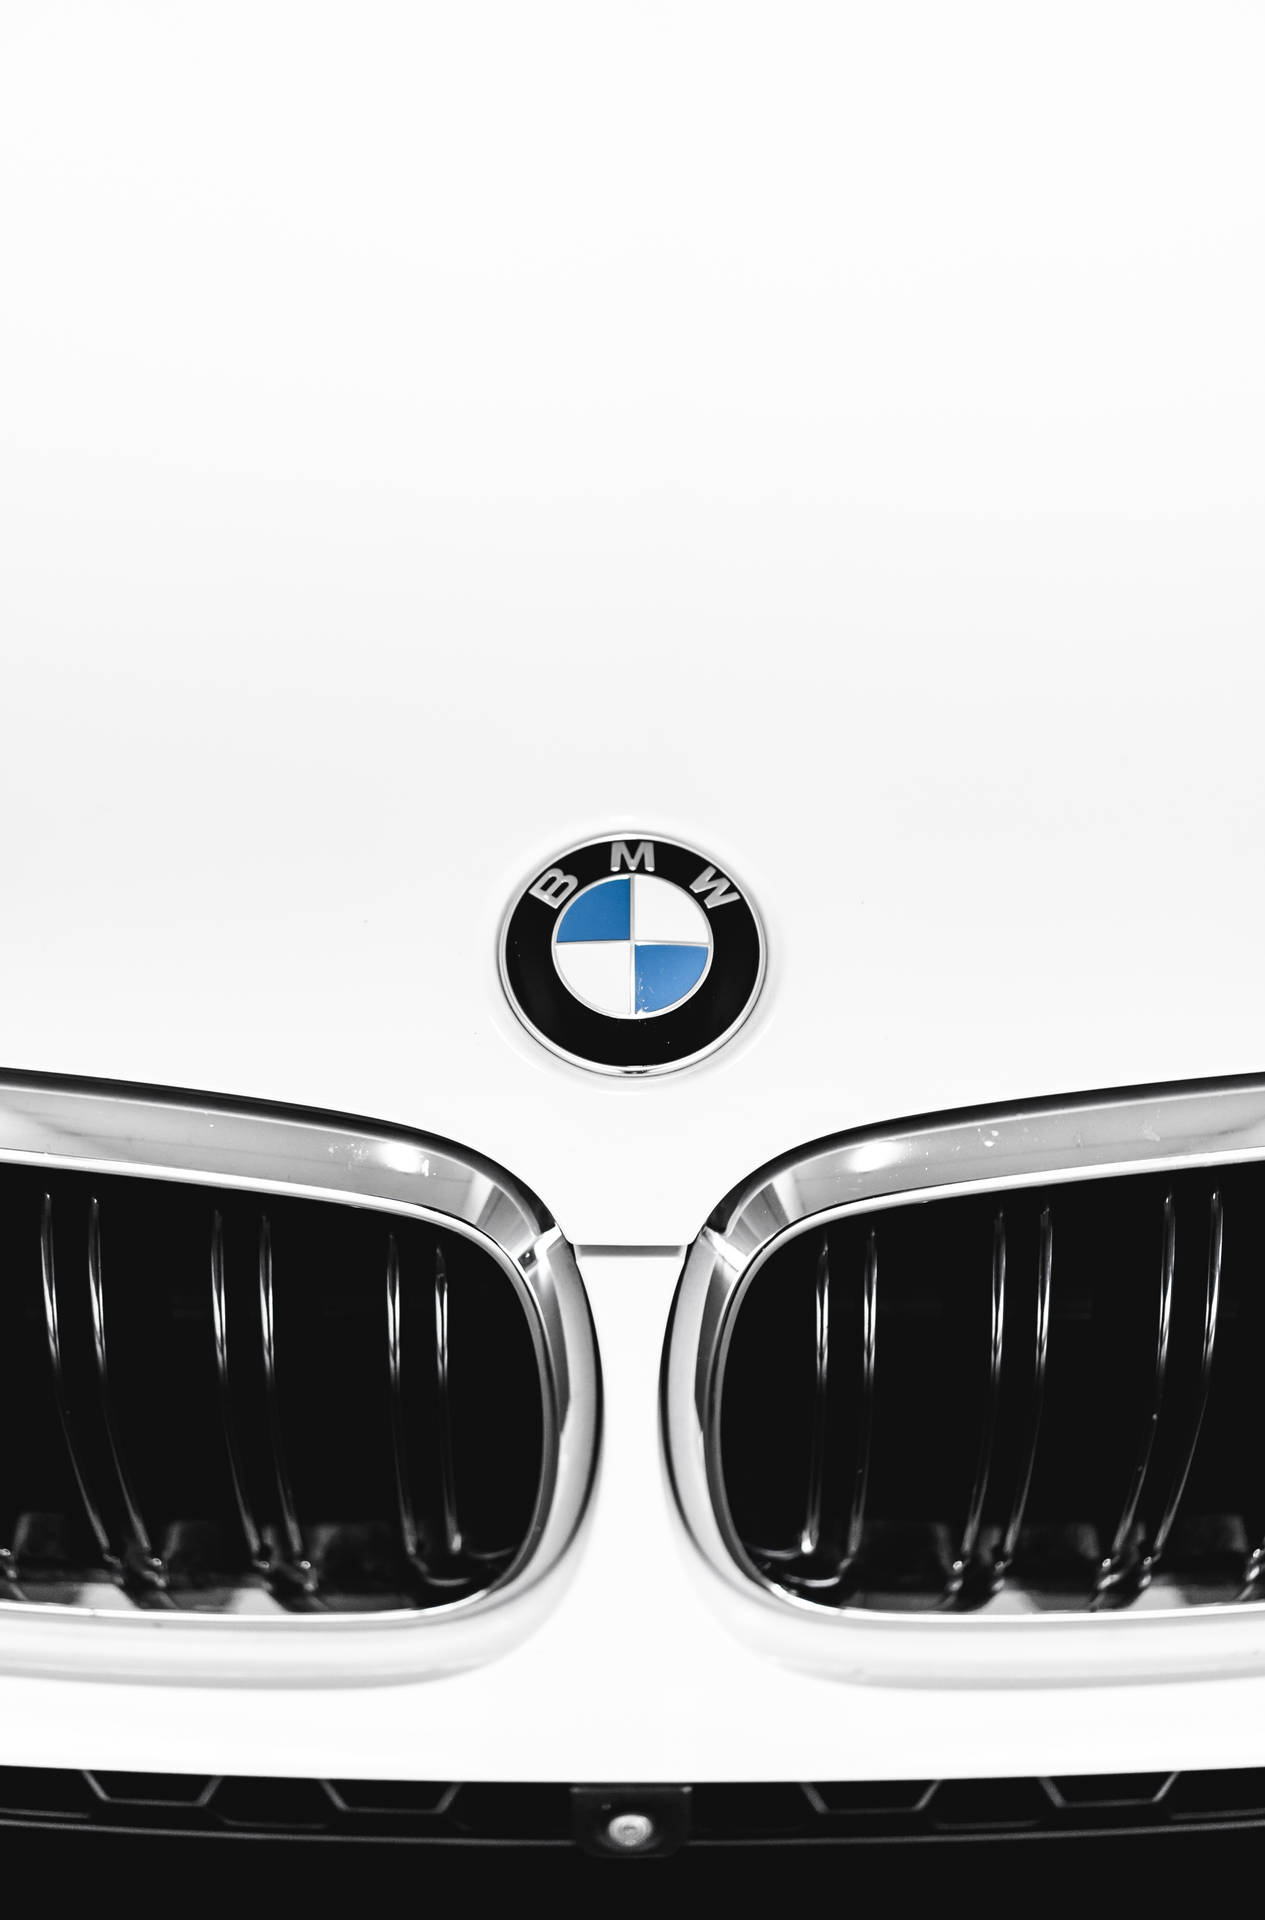 Close-up Emblem Grilles White BMW M Wallpaper